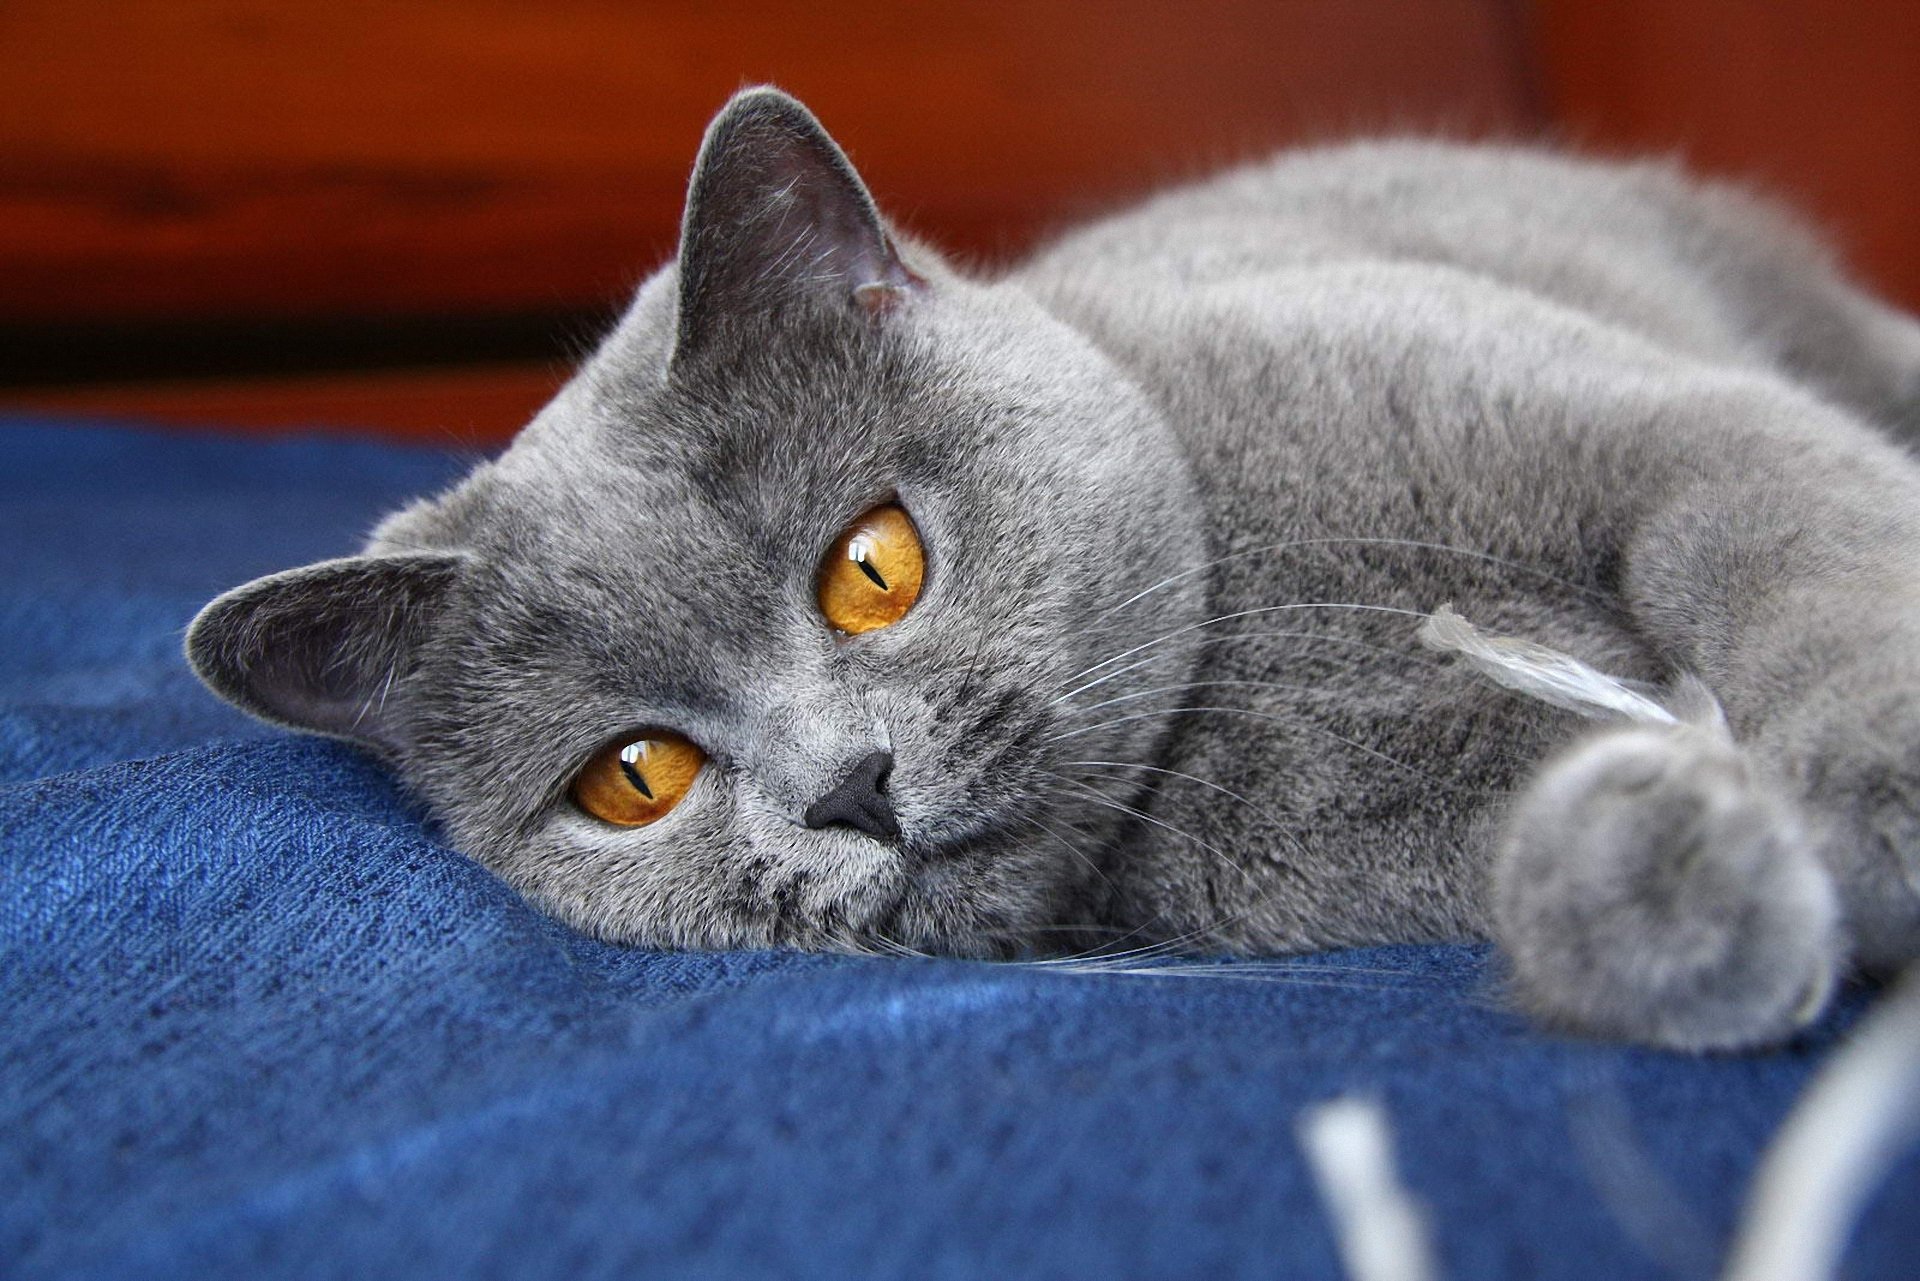 Cats img. Британская короткошёрстная кошка шартрез. Картезианская кошка британец. Британская кошка короткошерстная серая. Картезианская кошка голубая.